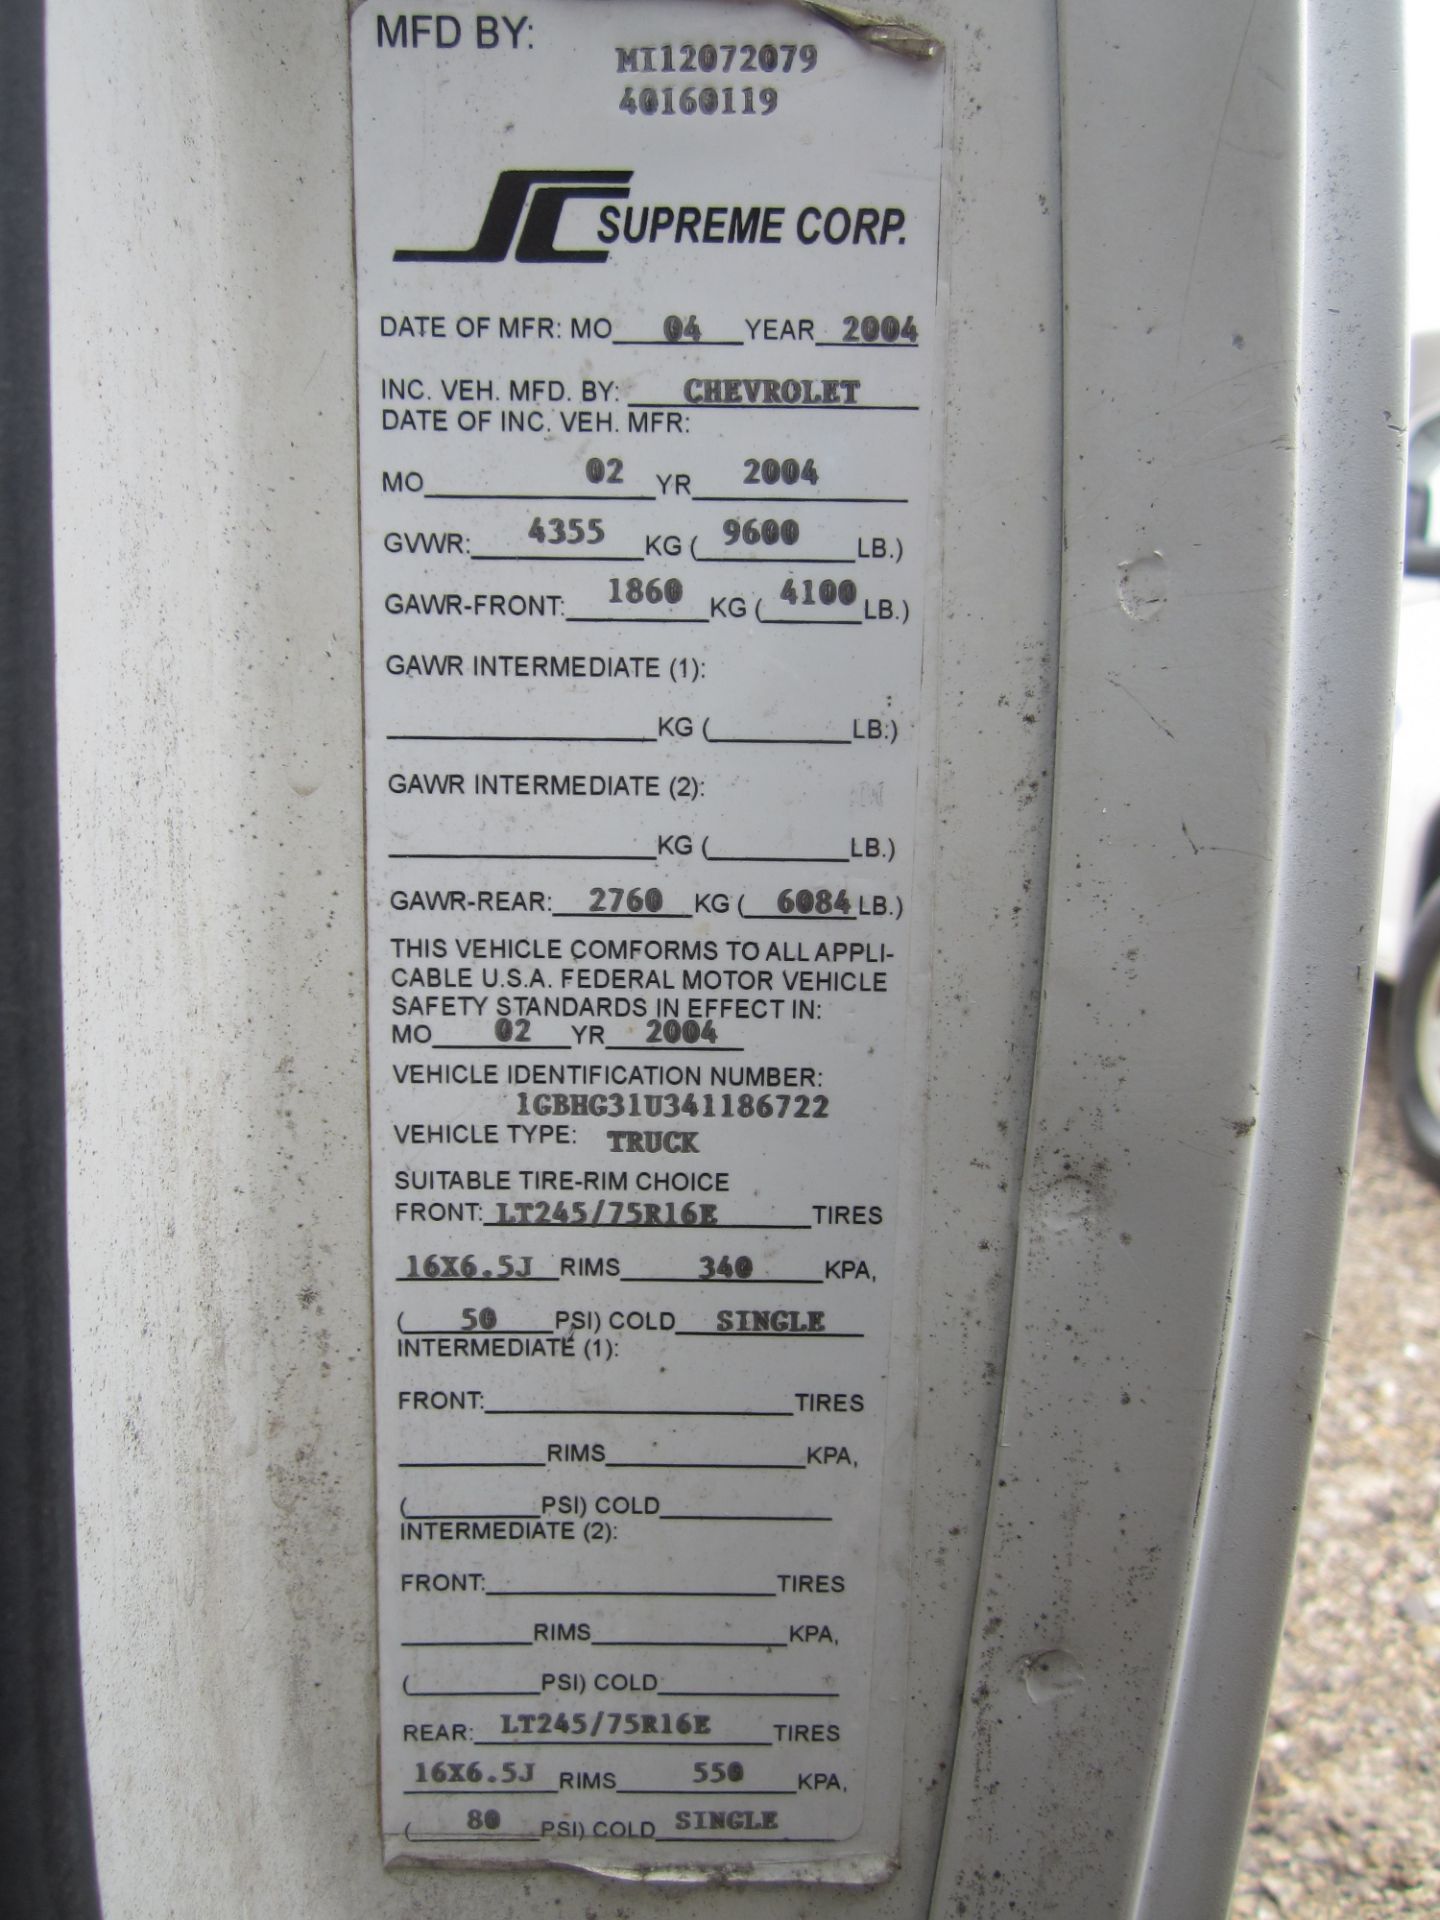 2004 Chevrolet 3500 Utility Van, VIN 1GBHG31U341186722, 12 Ft. Box, Automatic, AM/FM, AC, 241,478 - Image 17 of 17